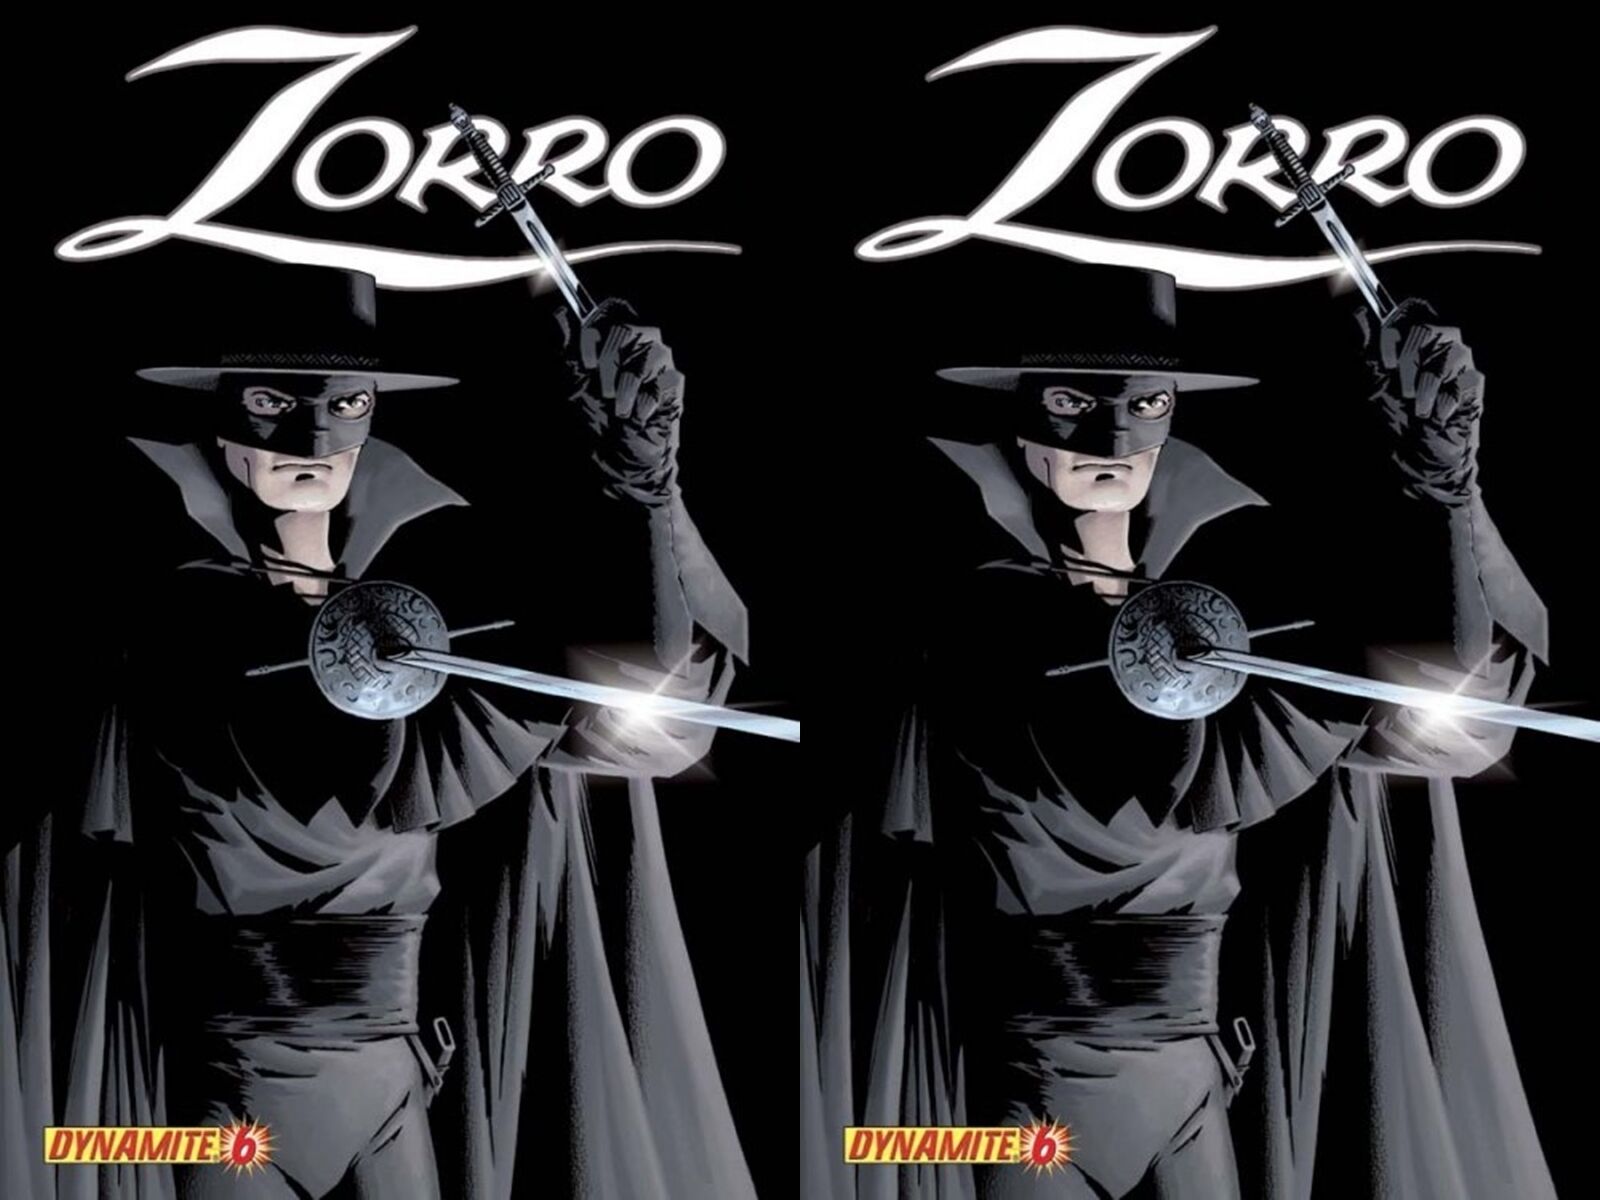 Zorro #6 Volume 5 (2008-2010) Dynamite Comics - 2 Comics